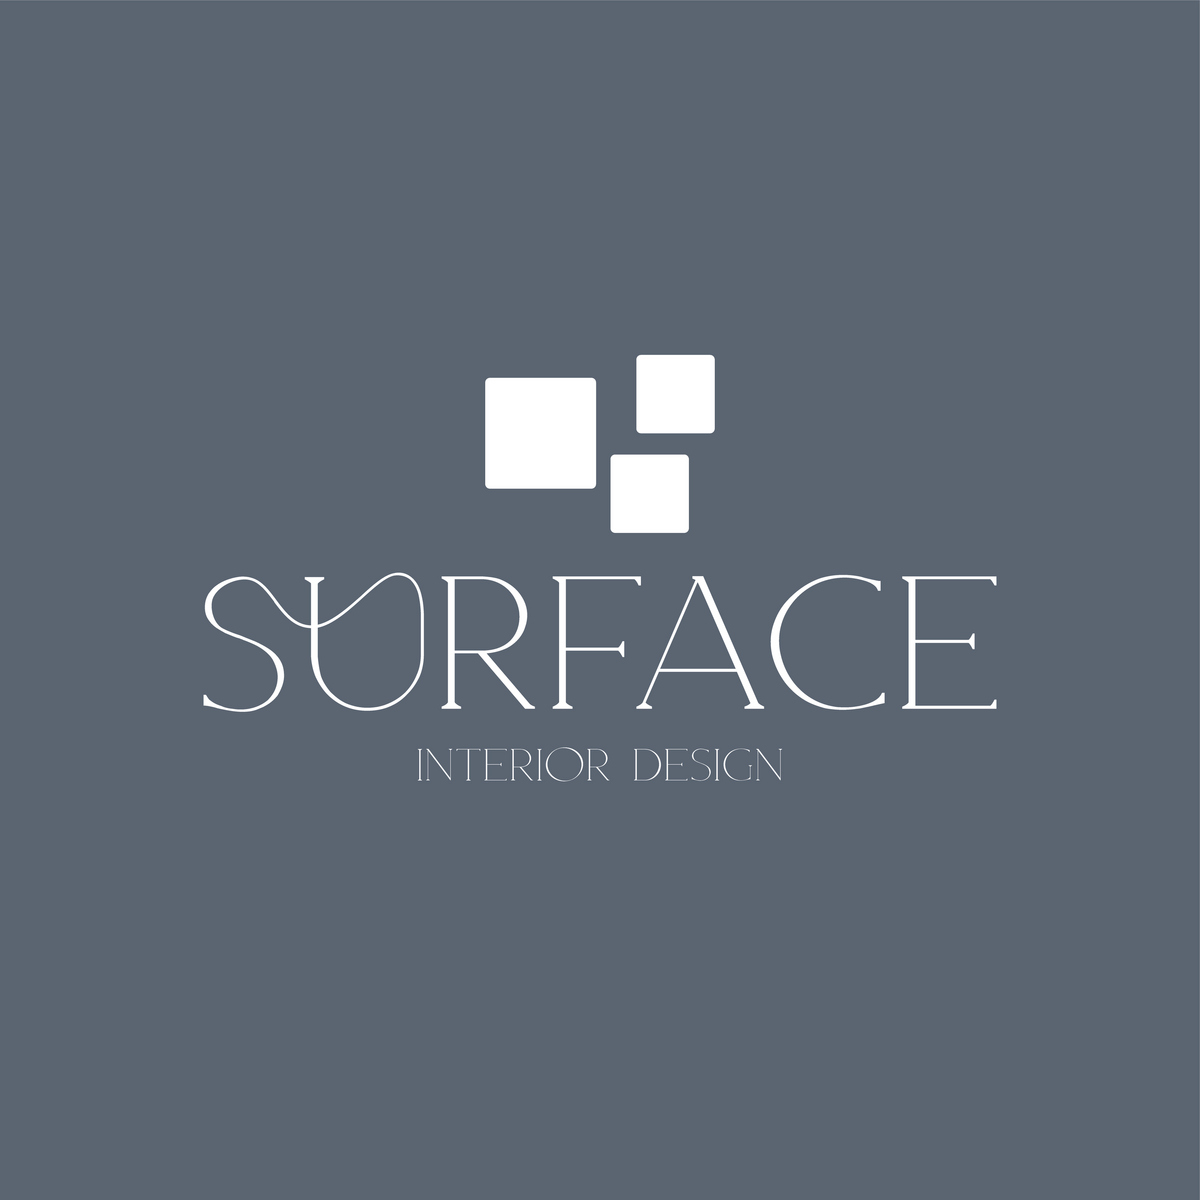 Surface_brand identity_1-05